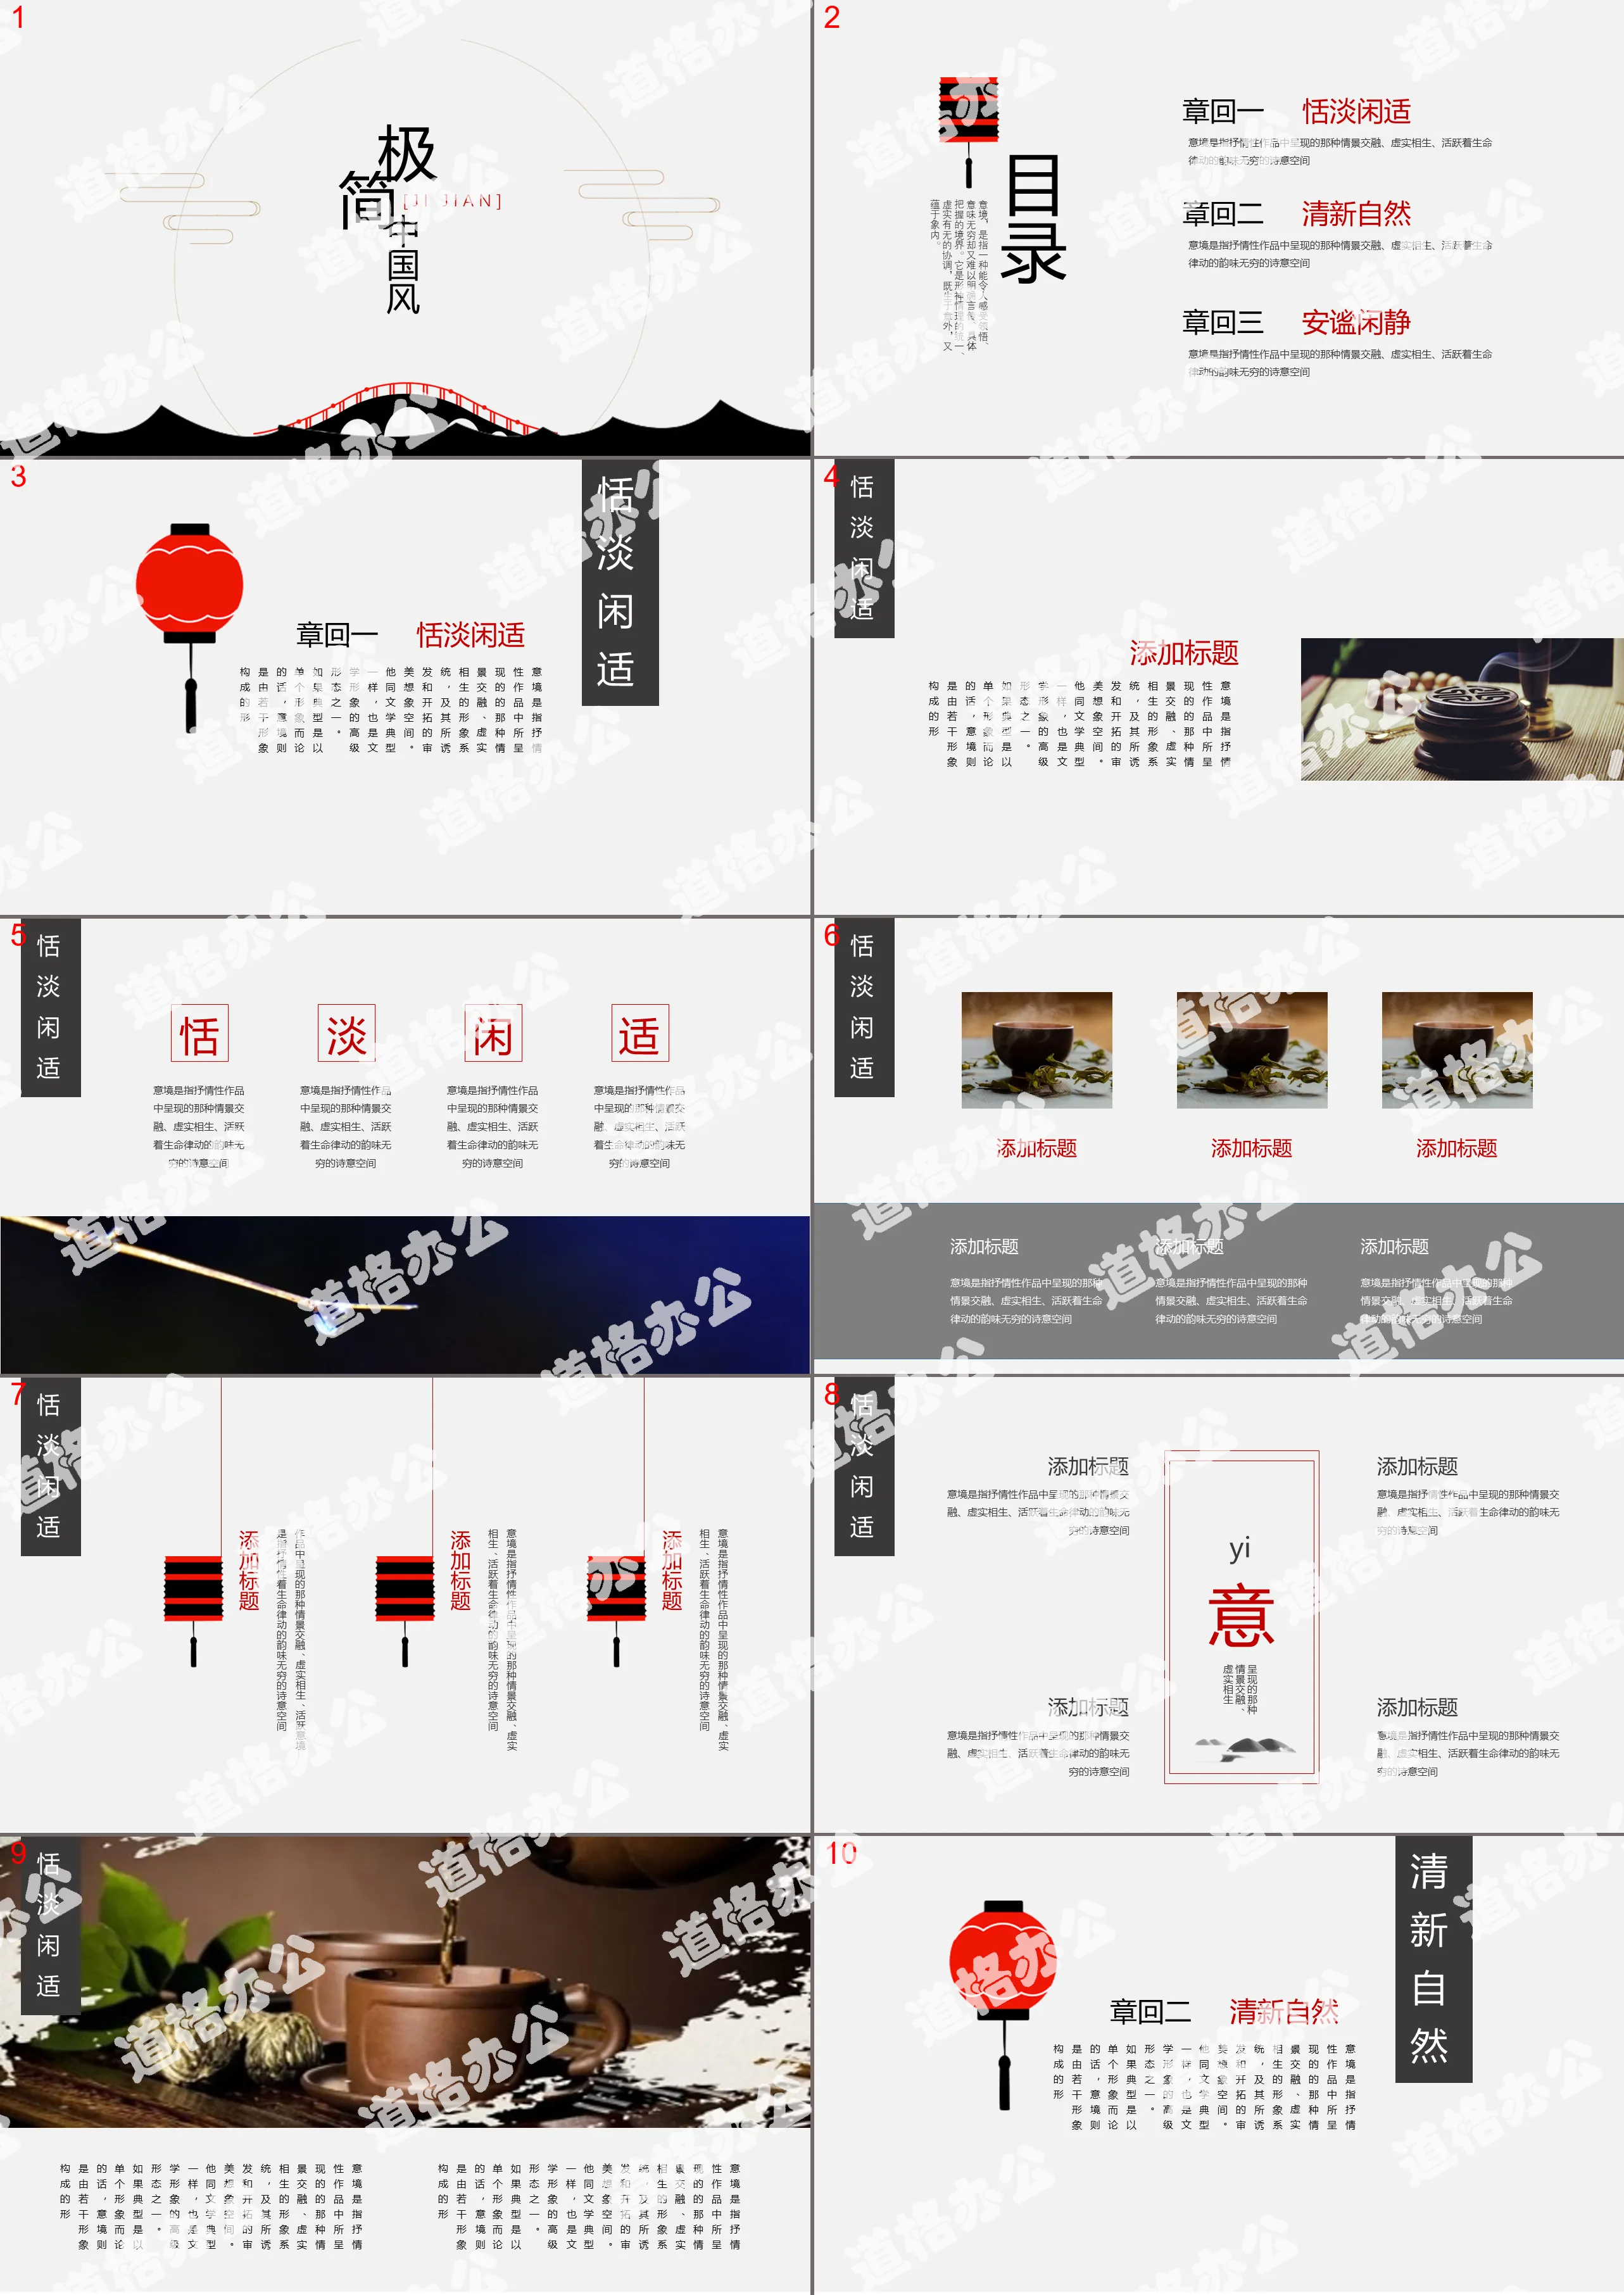 Black minimalist petty bourgeoisie Chinese style PPT template